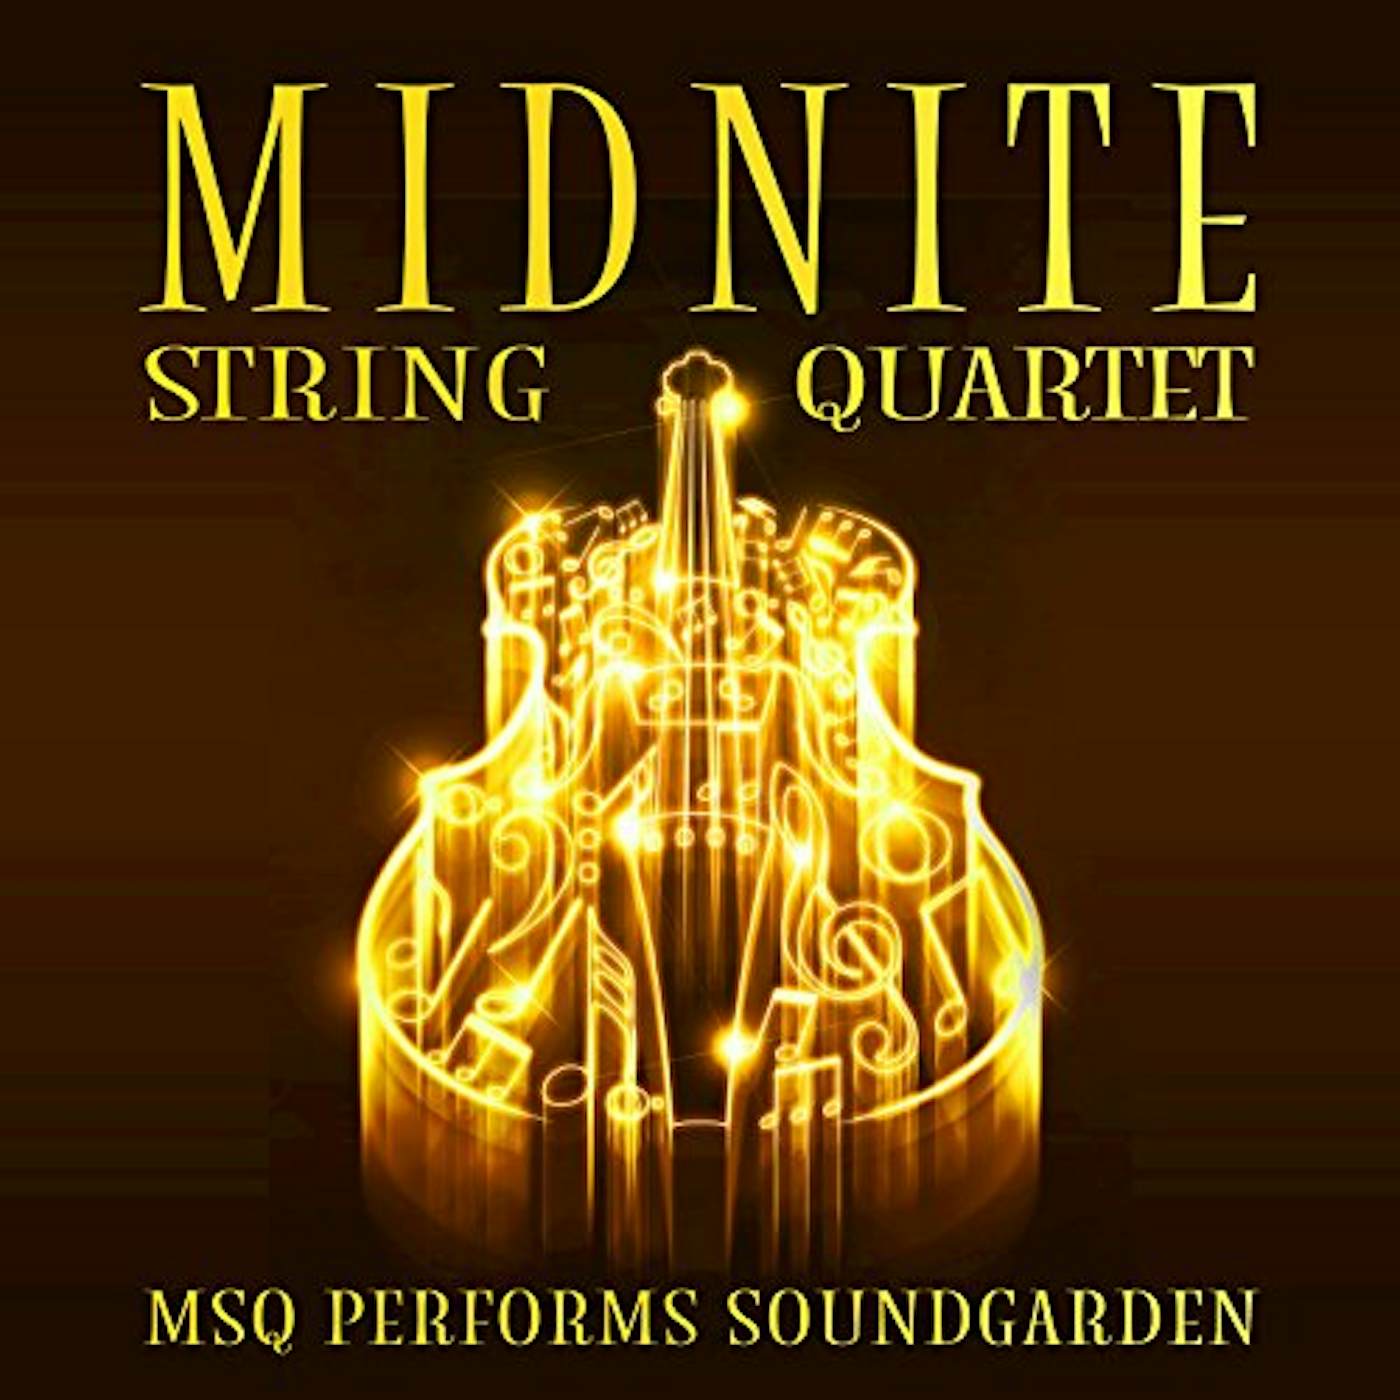 Midnite String Quartet MSQ PERFORMS SOUNDGARDEN (MOD) CD